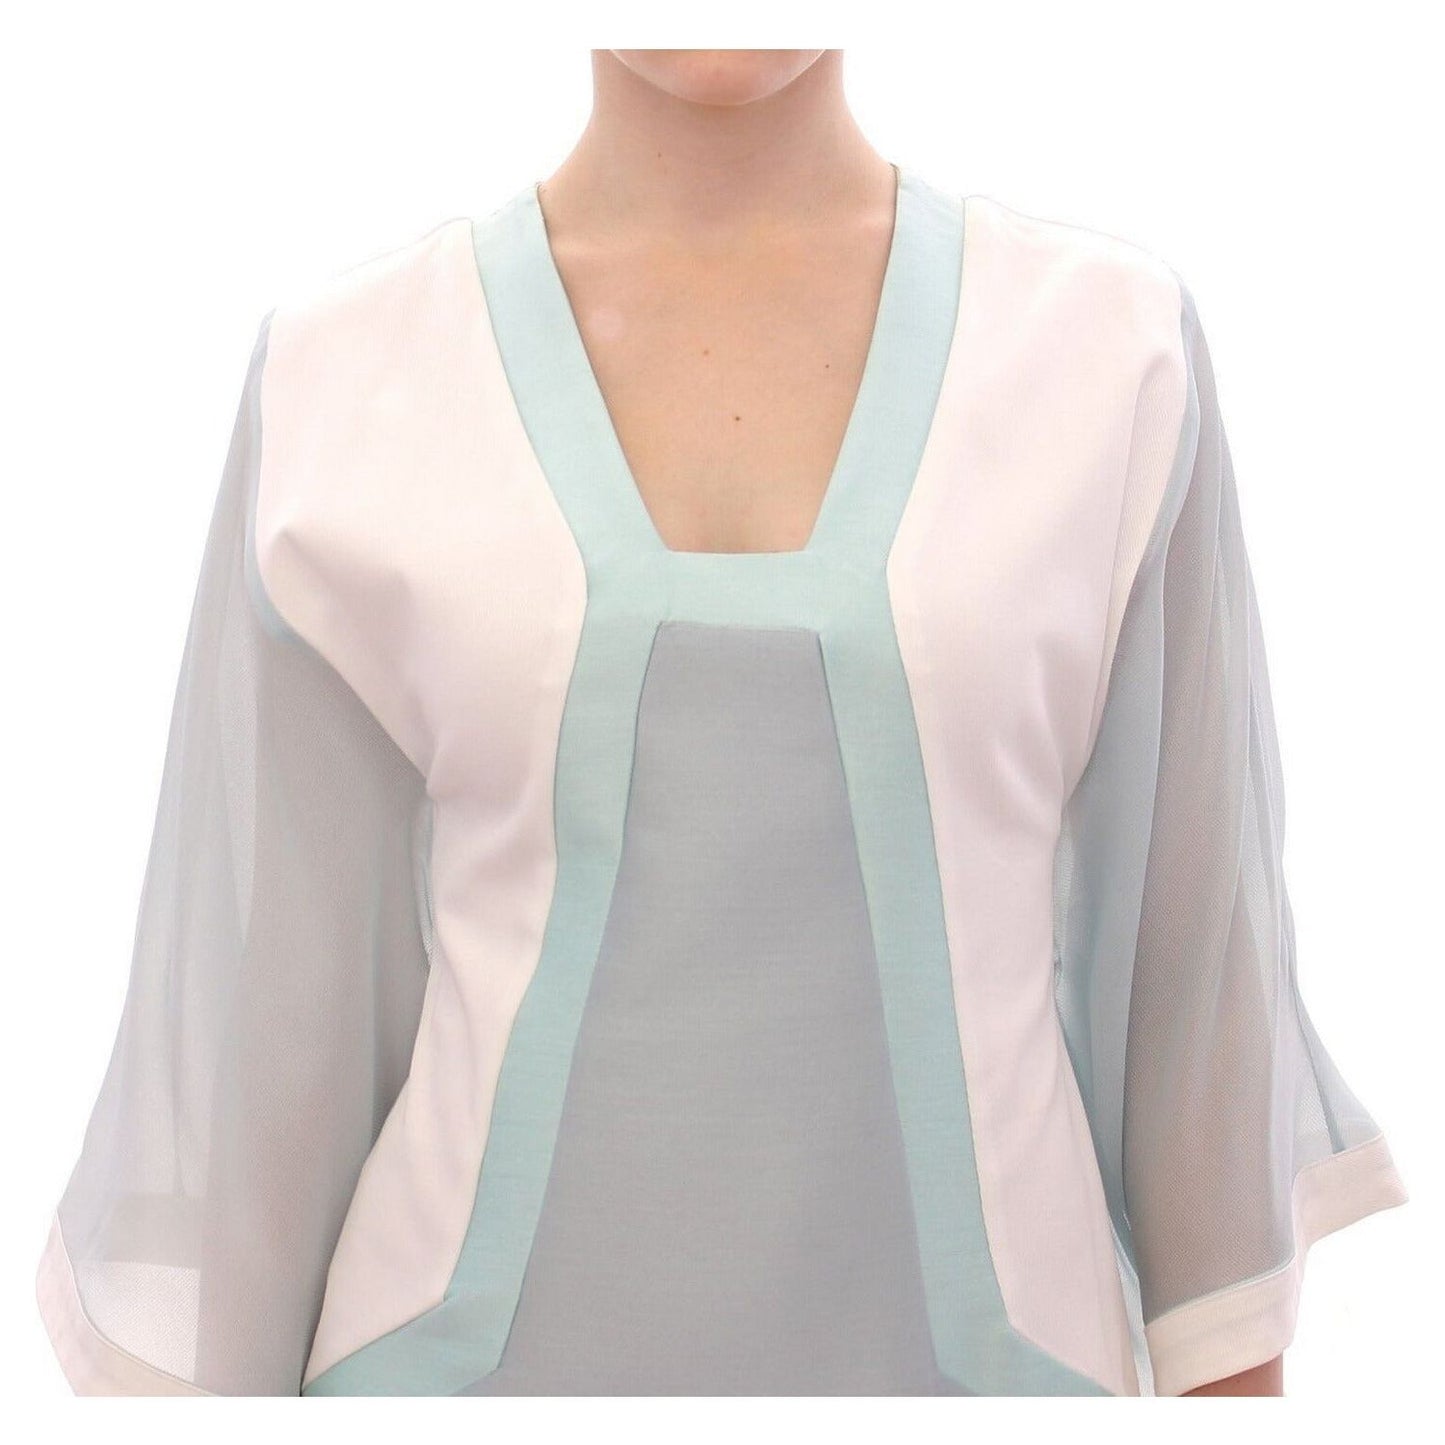 Sergei Grinko Elegant Turquoise Silk Sheath Dress WOMAN DRESSES white-silk-sheath-formal-turquoise-dress